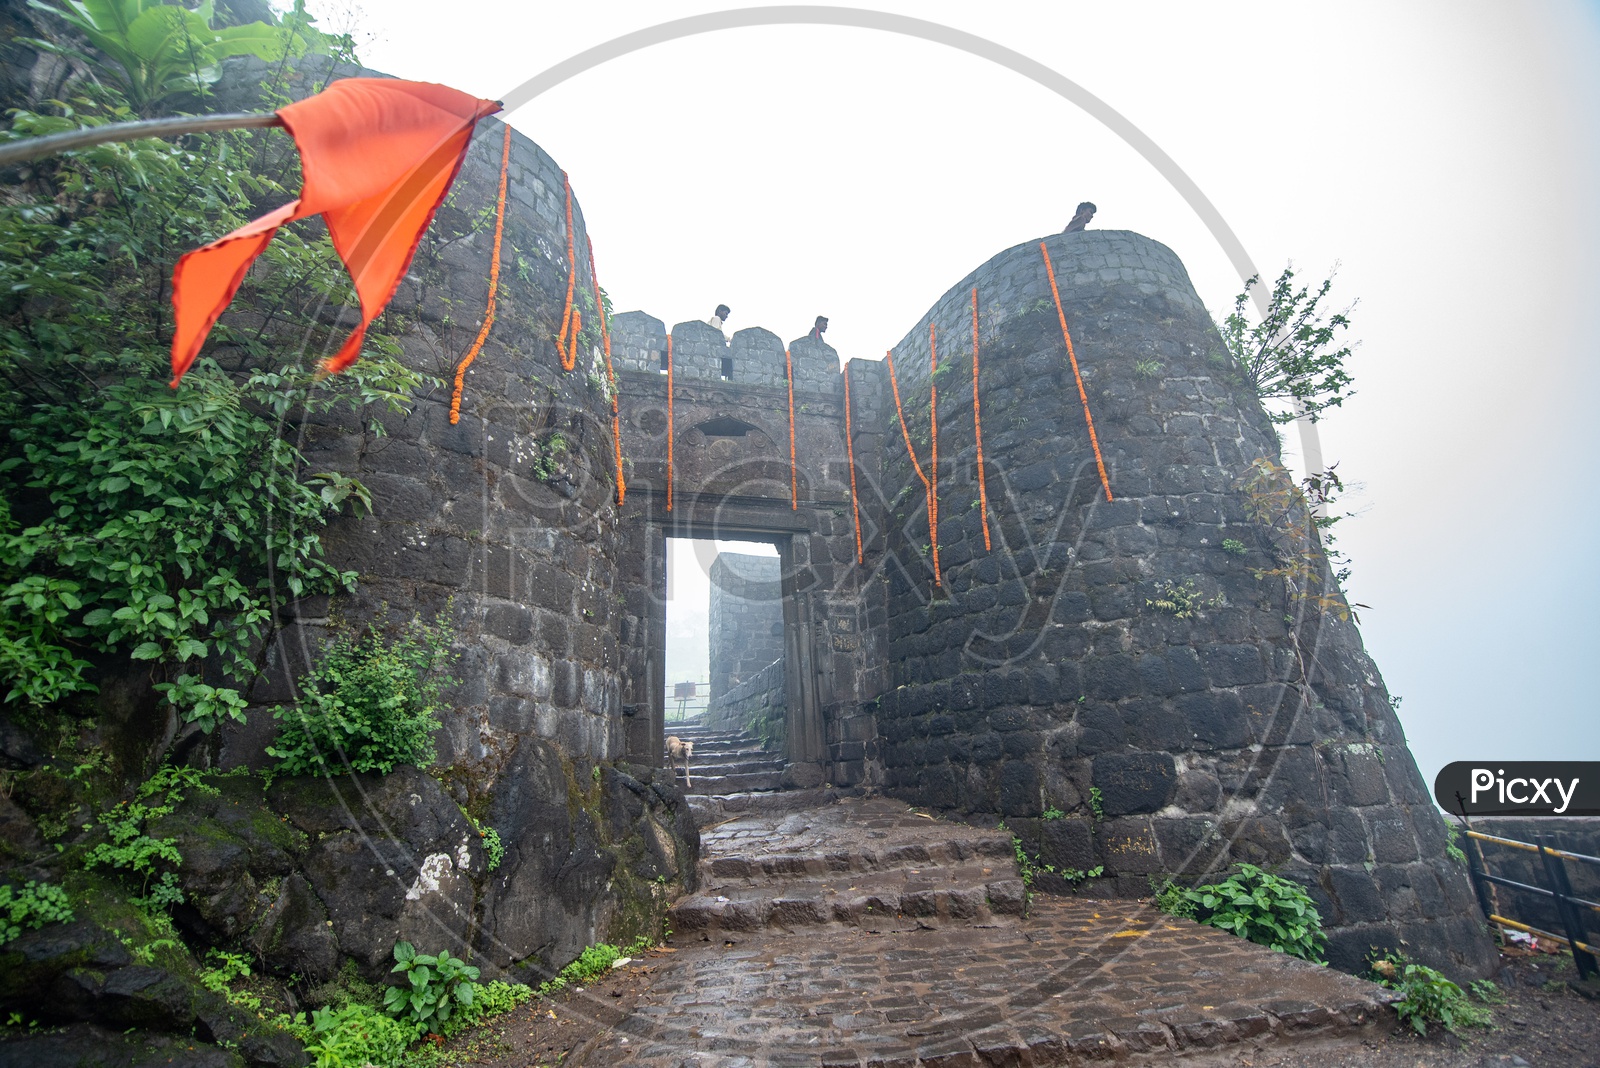 Pune Darwaza - The main gate entrance to Sinhagad Fort